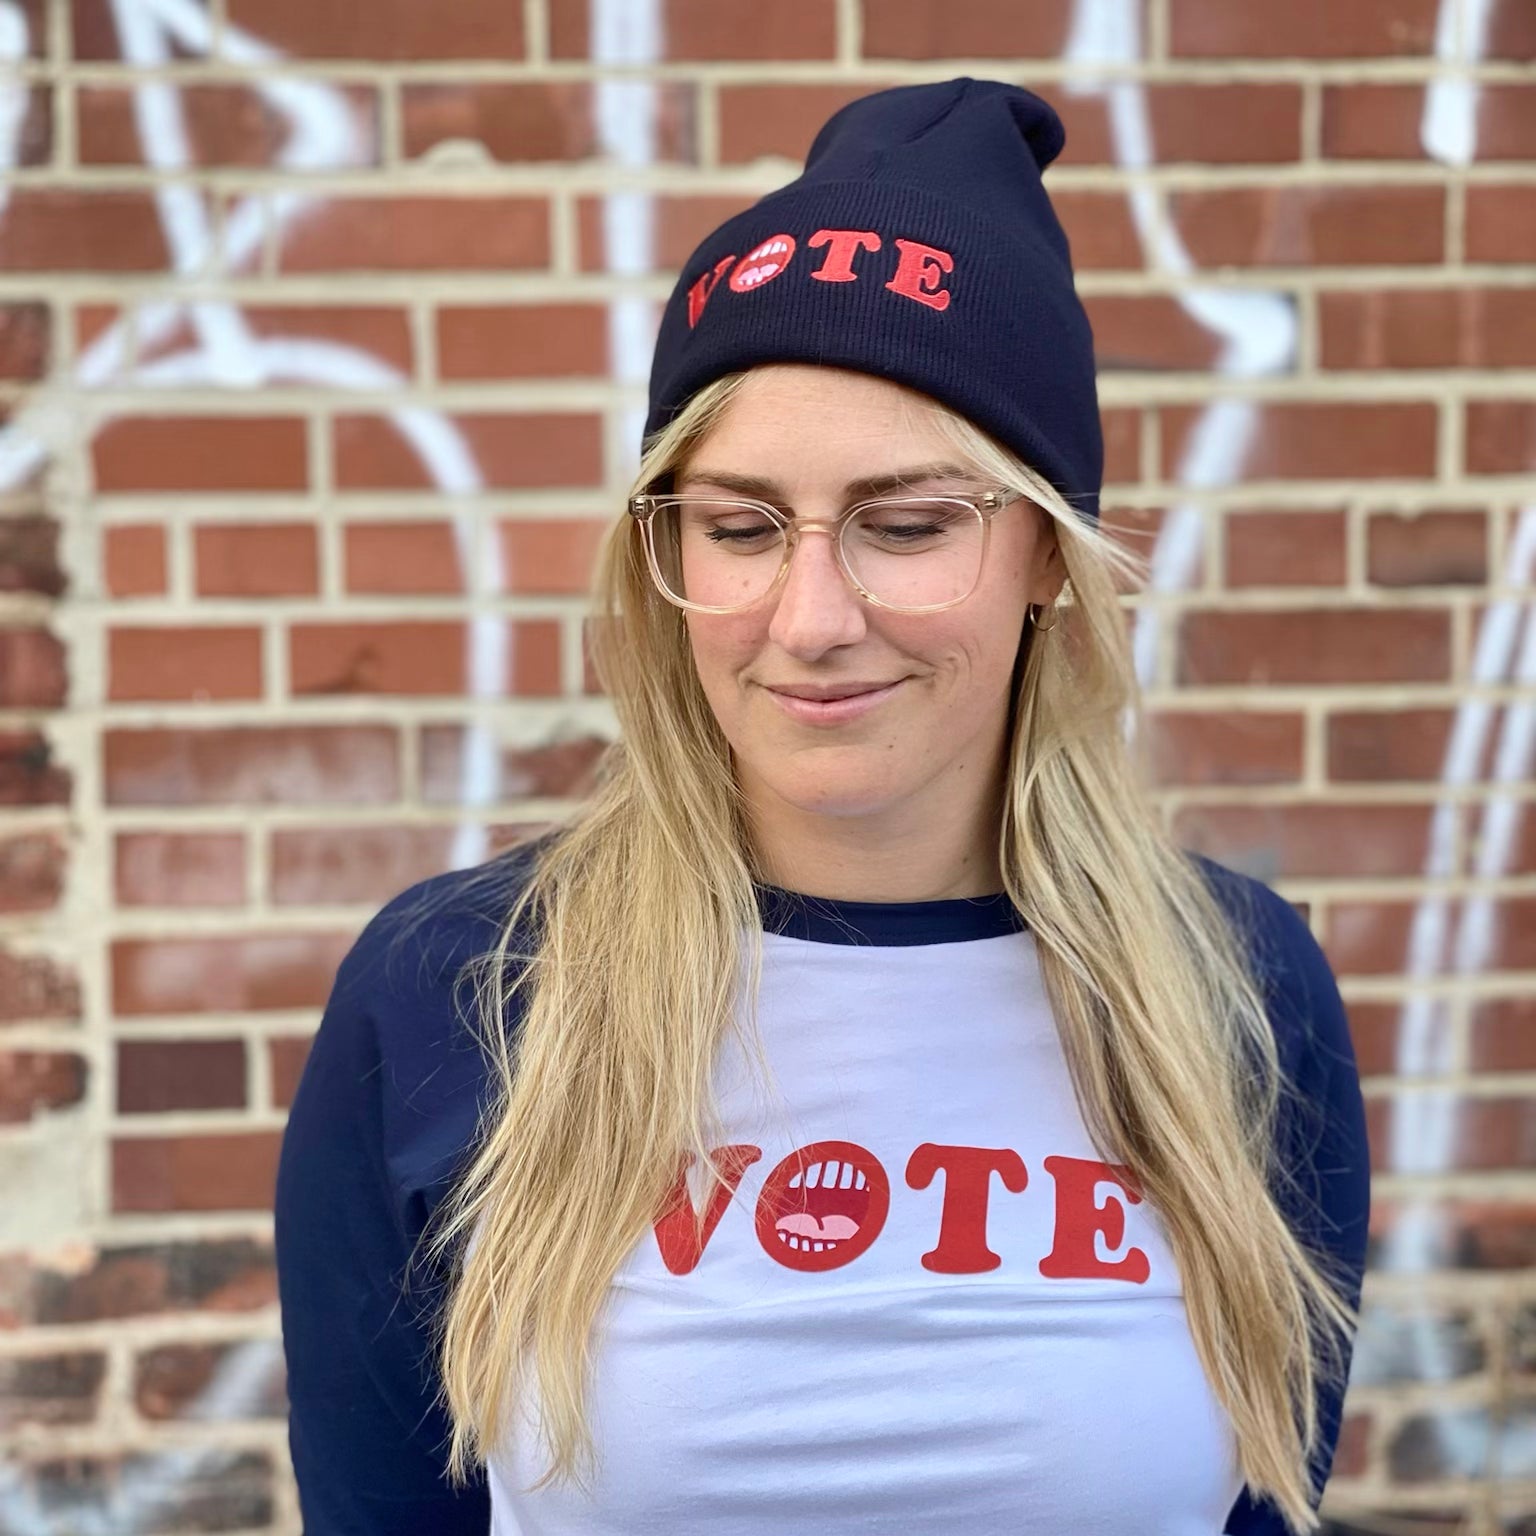 Blonde woman wearing vote beanie and vote raglan